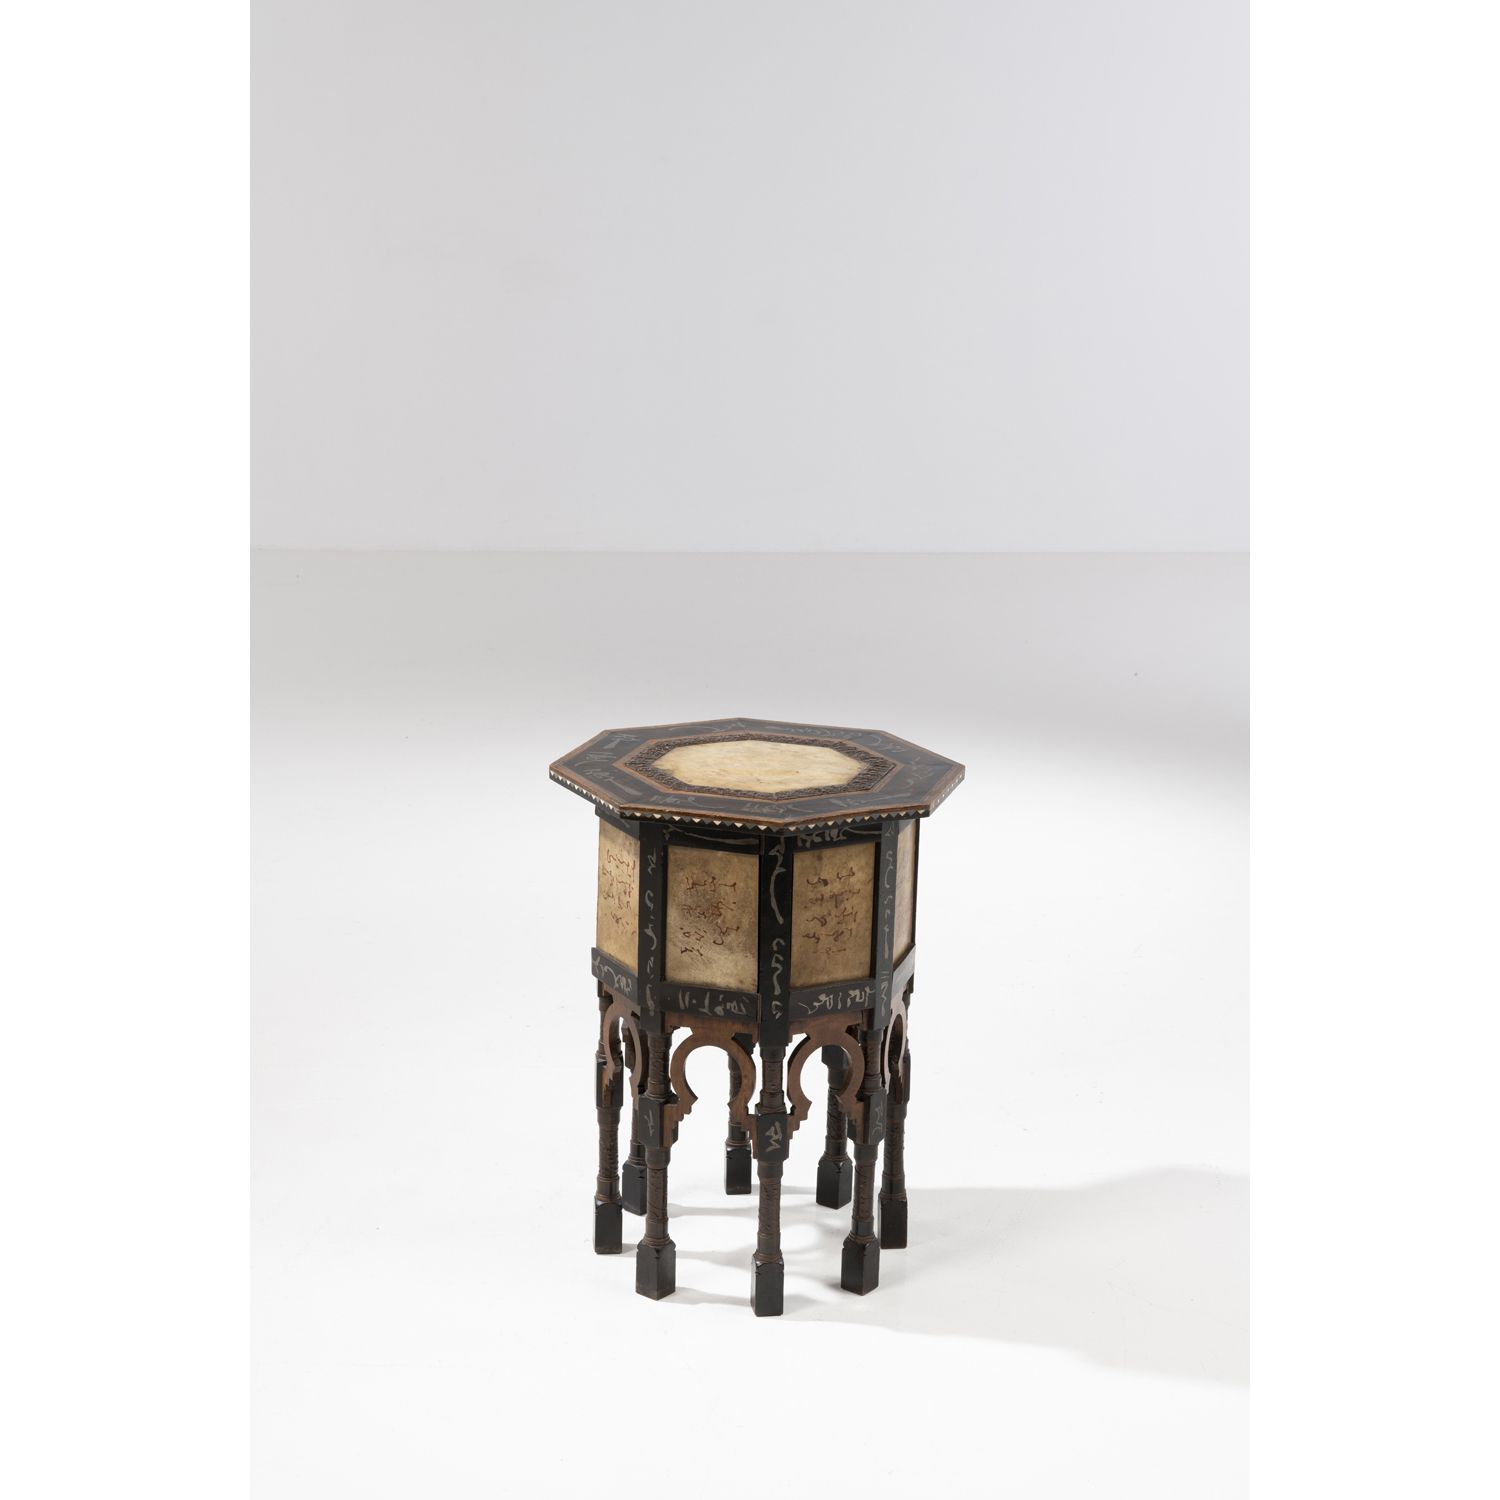 Null 卡洛-布加迪 (1856-1940)

边桌

碳化木、羊皮纸、黄铜和石头

1900年左右设计

高60×宽45×深45厘米